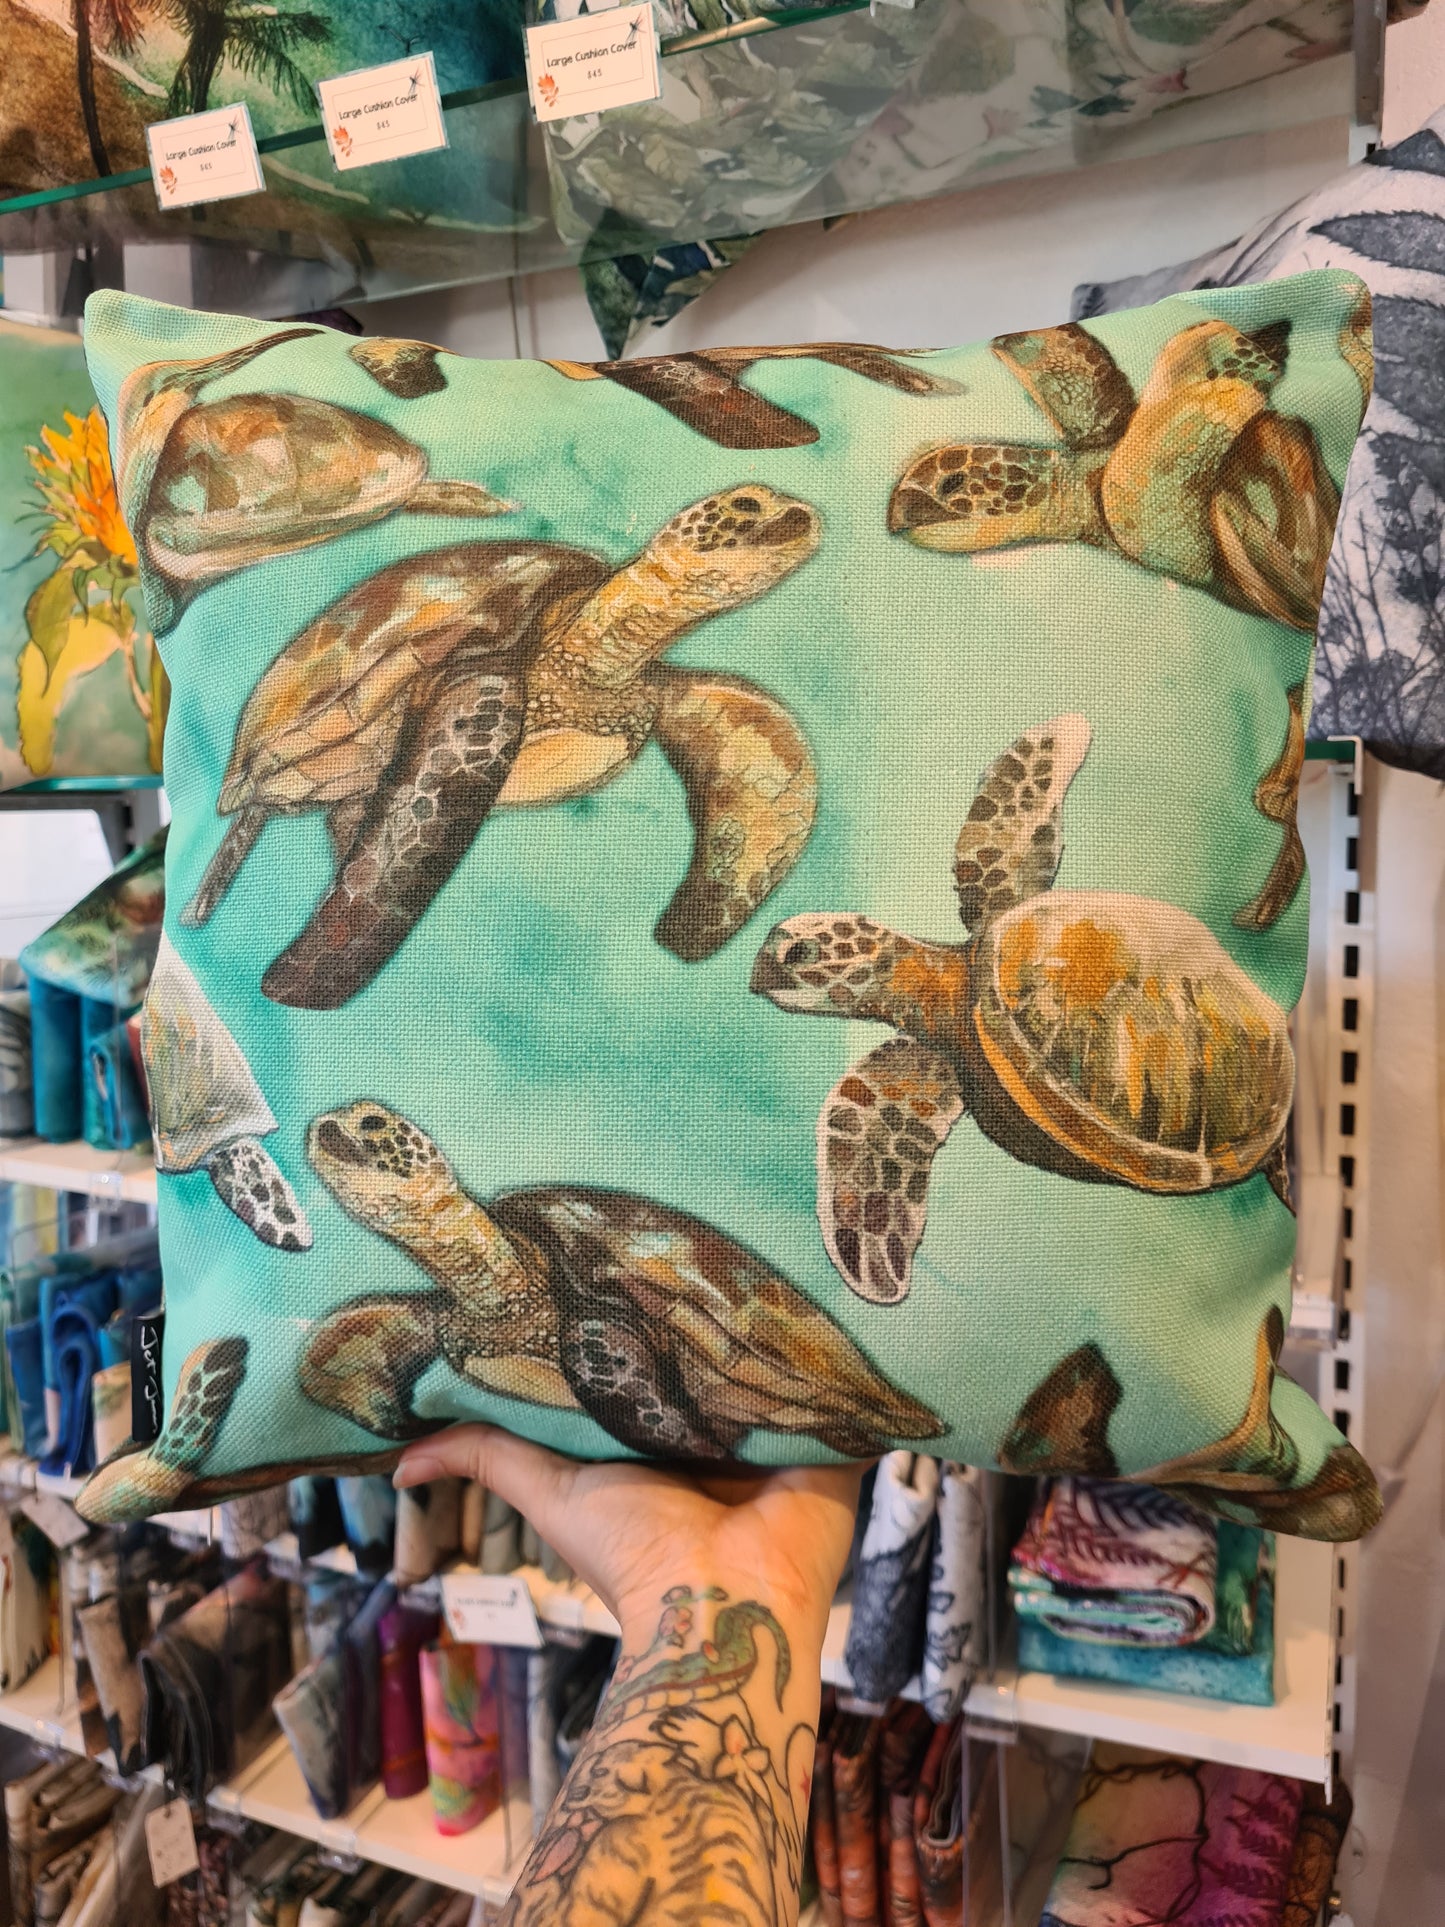 Sea Turtles Cushion Cover